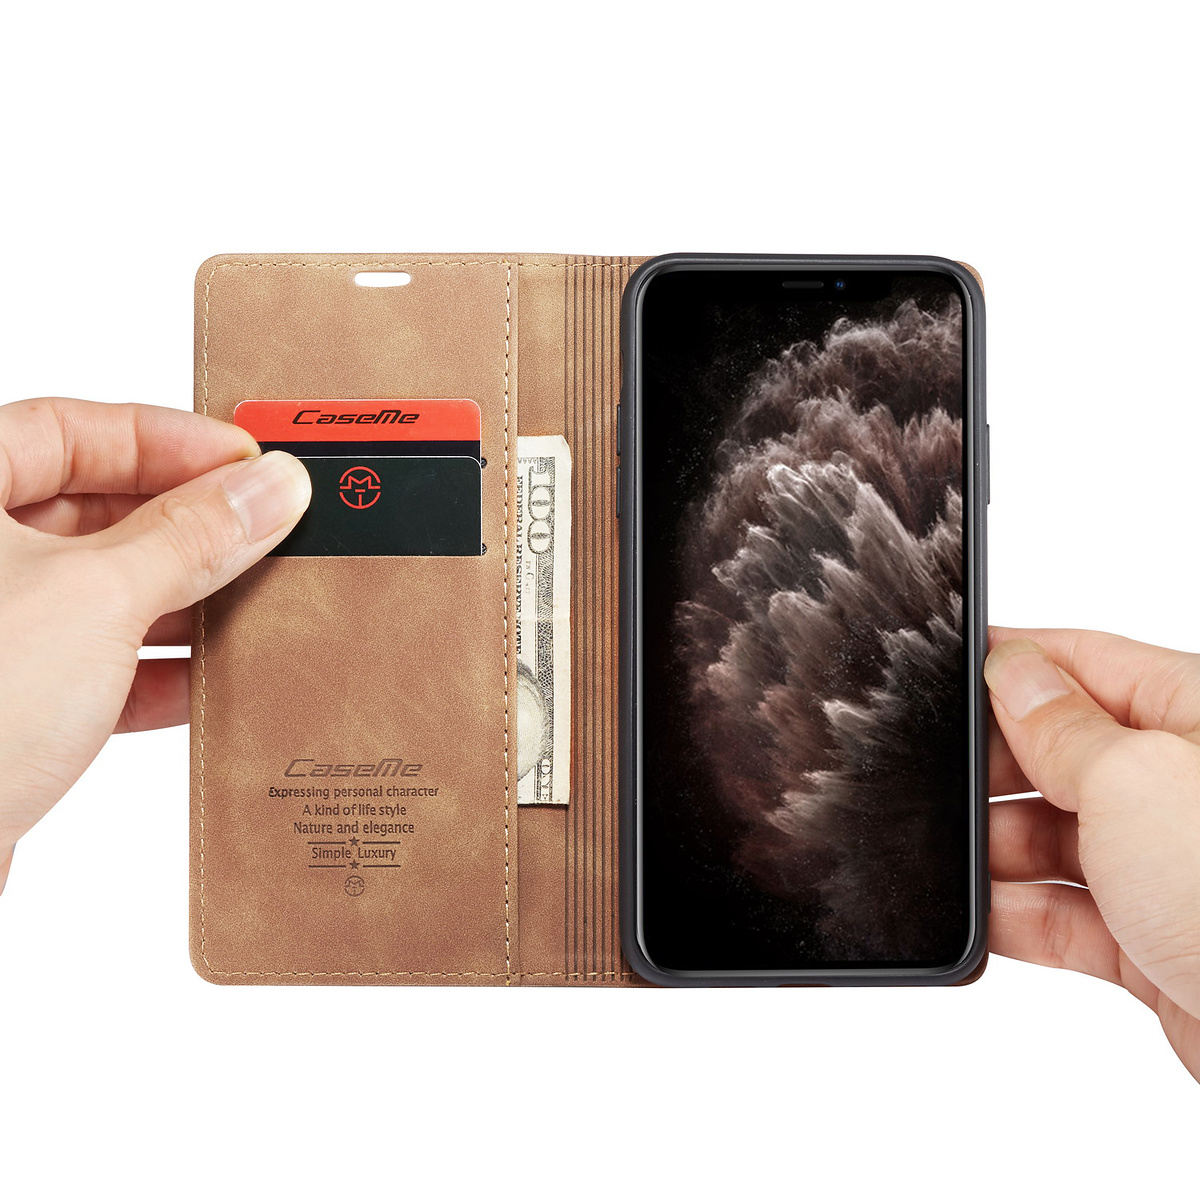 CaseMe plånboksfodral, iPhone 11 Pro Max, brun